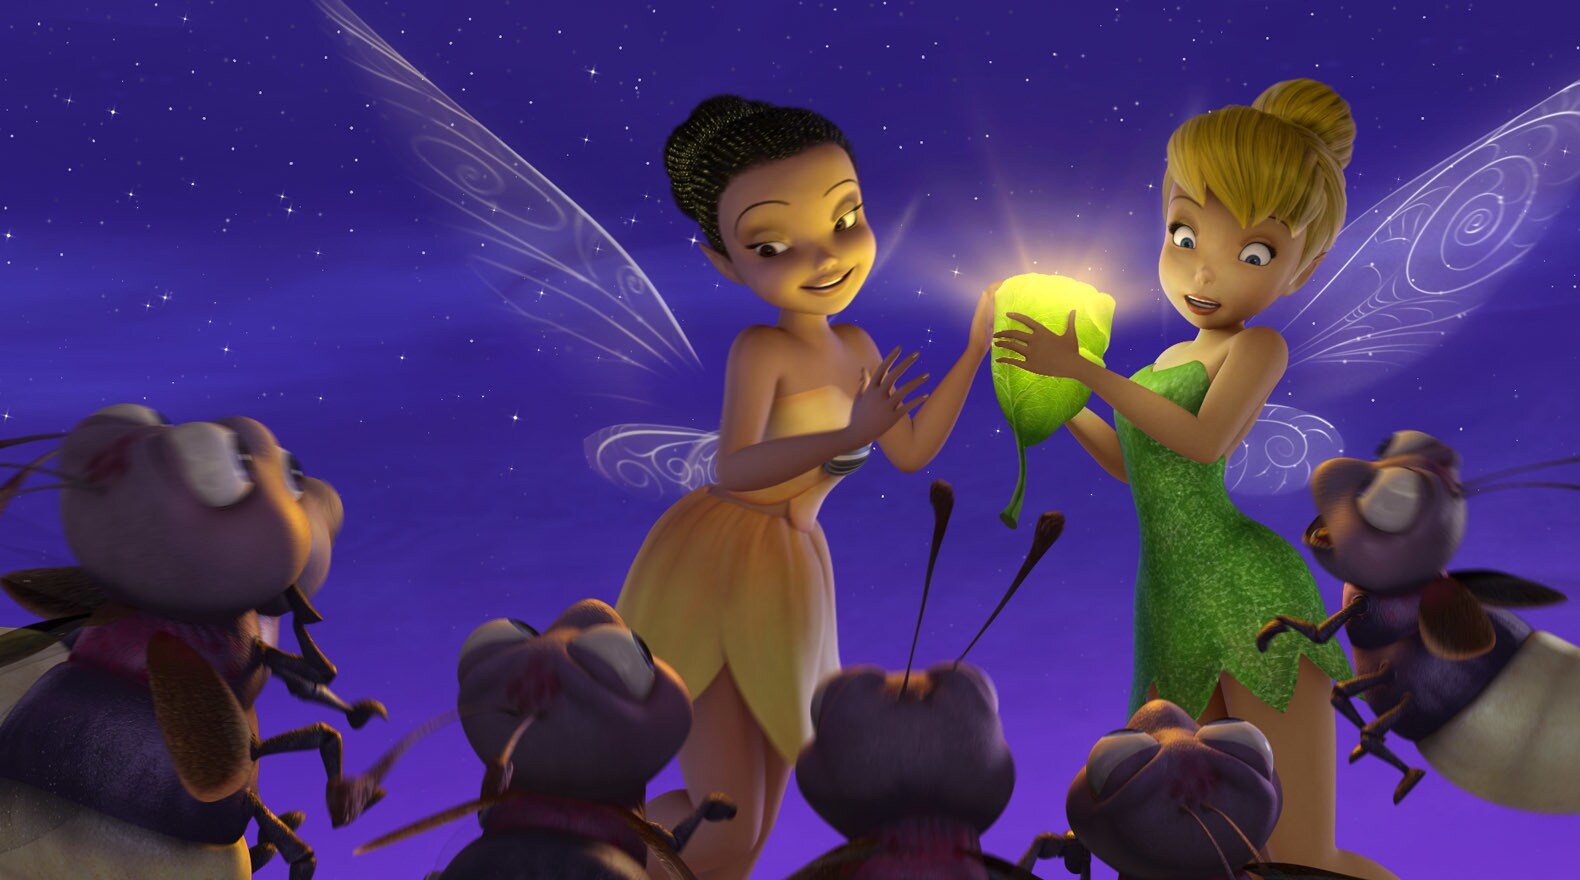 Iridessa tries showing Tink one of the Light Fairy skills.